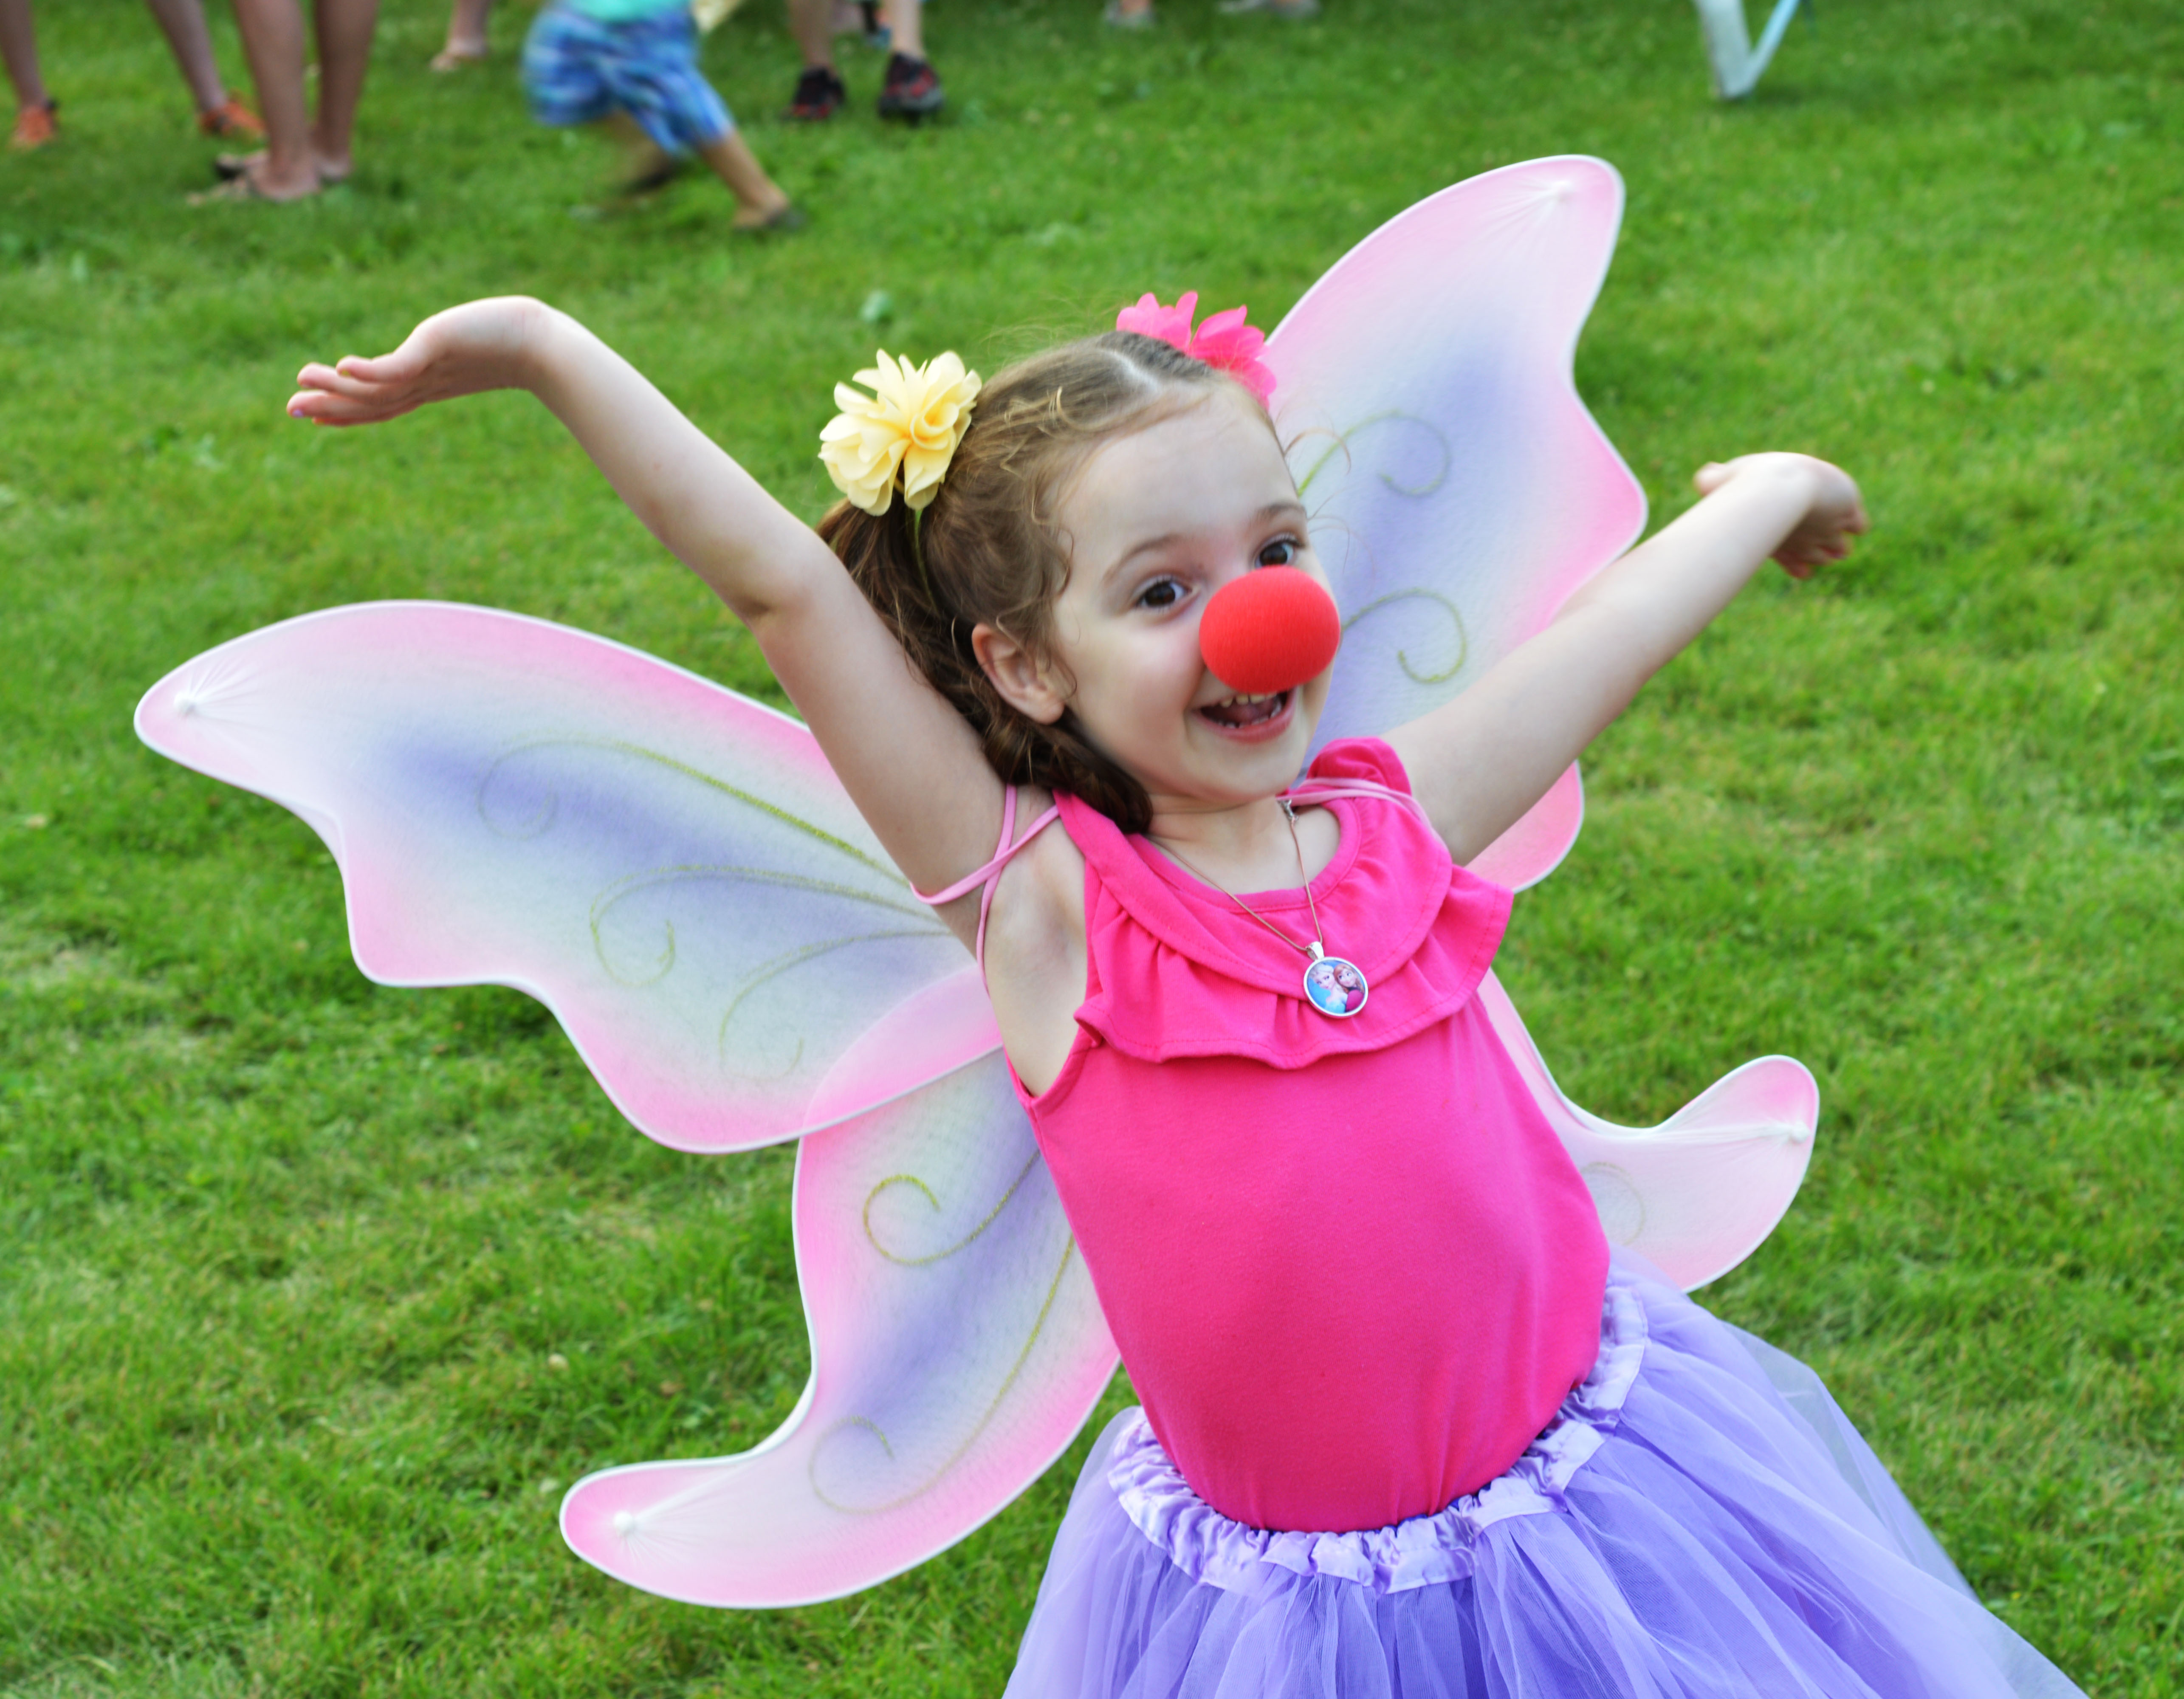 A fairy princess clown spreading some Smirkus spirit as patrons wait to enter the Big Top, July 5, 2015.